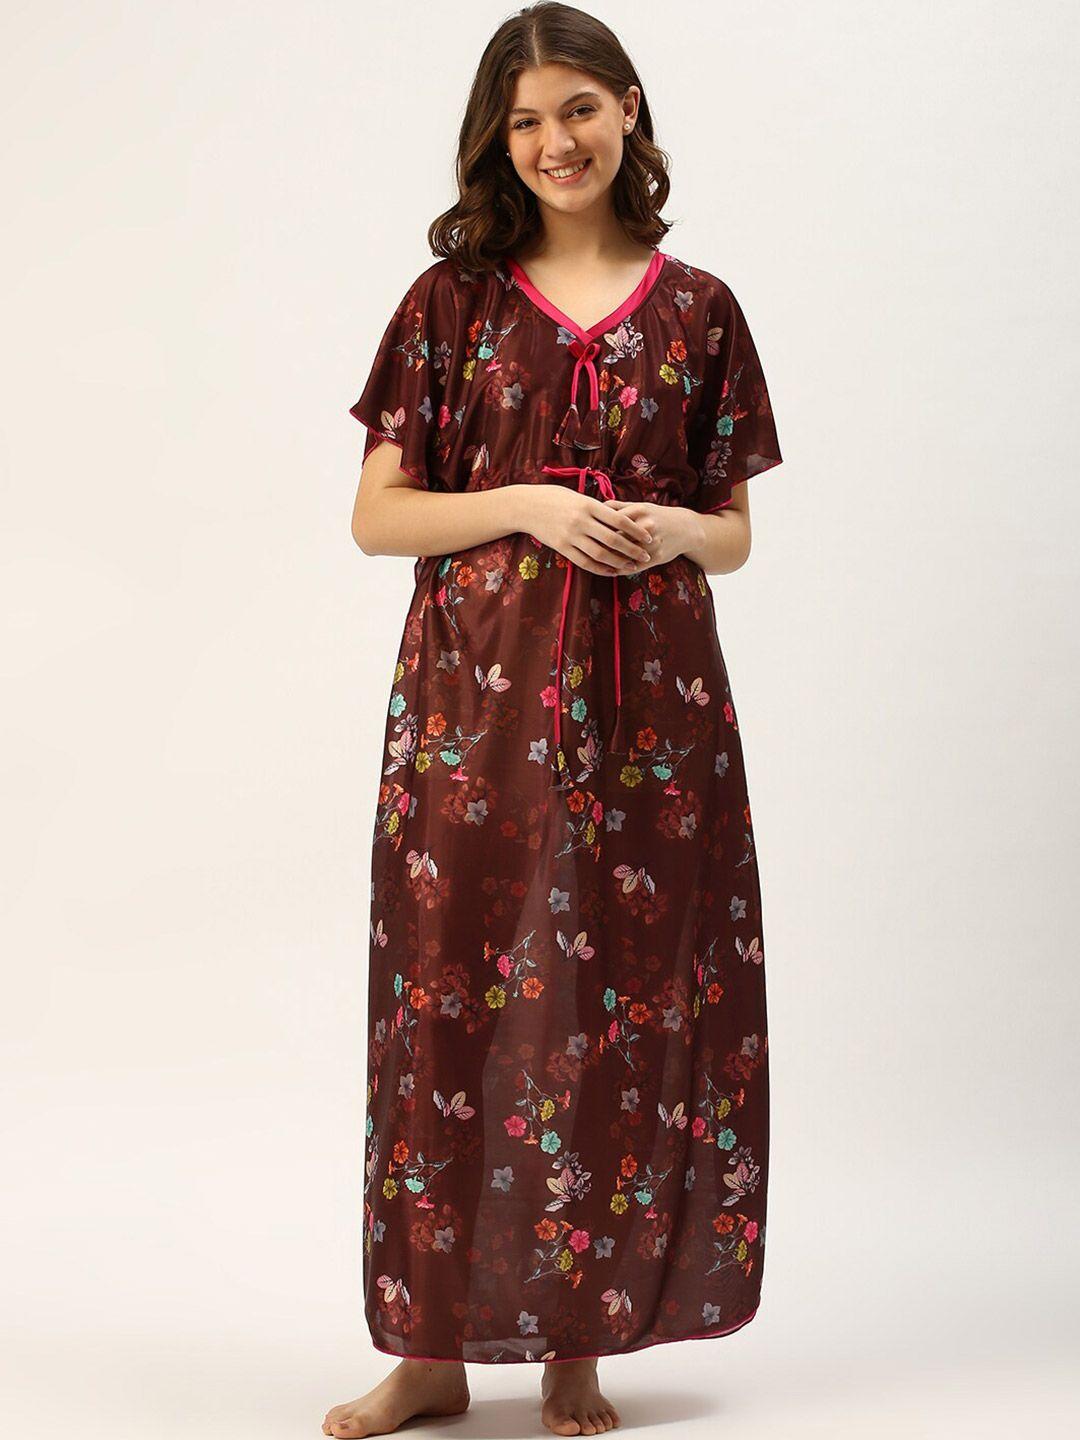 trundz-women-brown-floral-printed-maxi-kaftan-nightdress